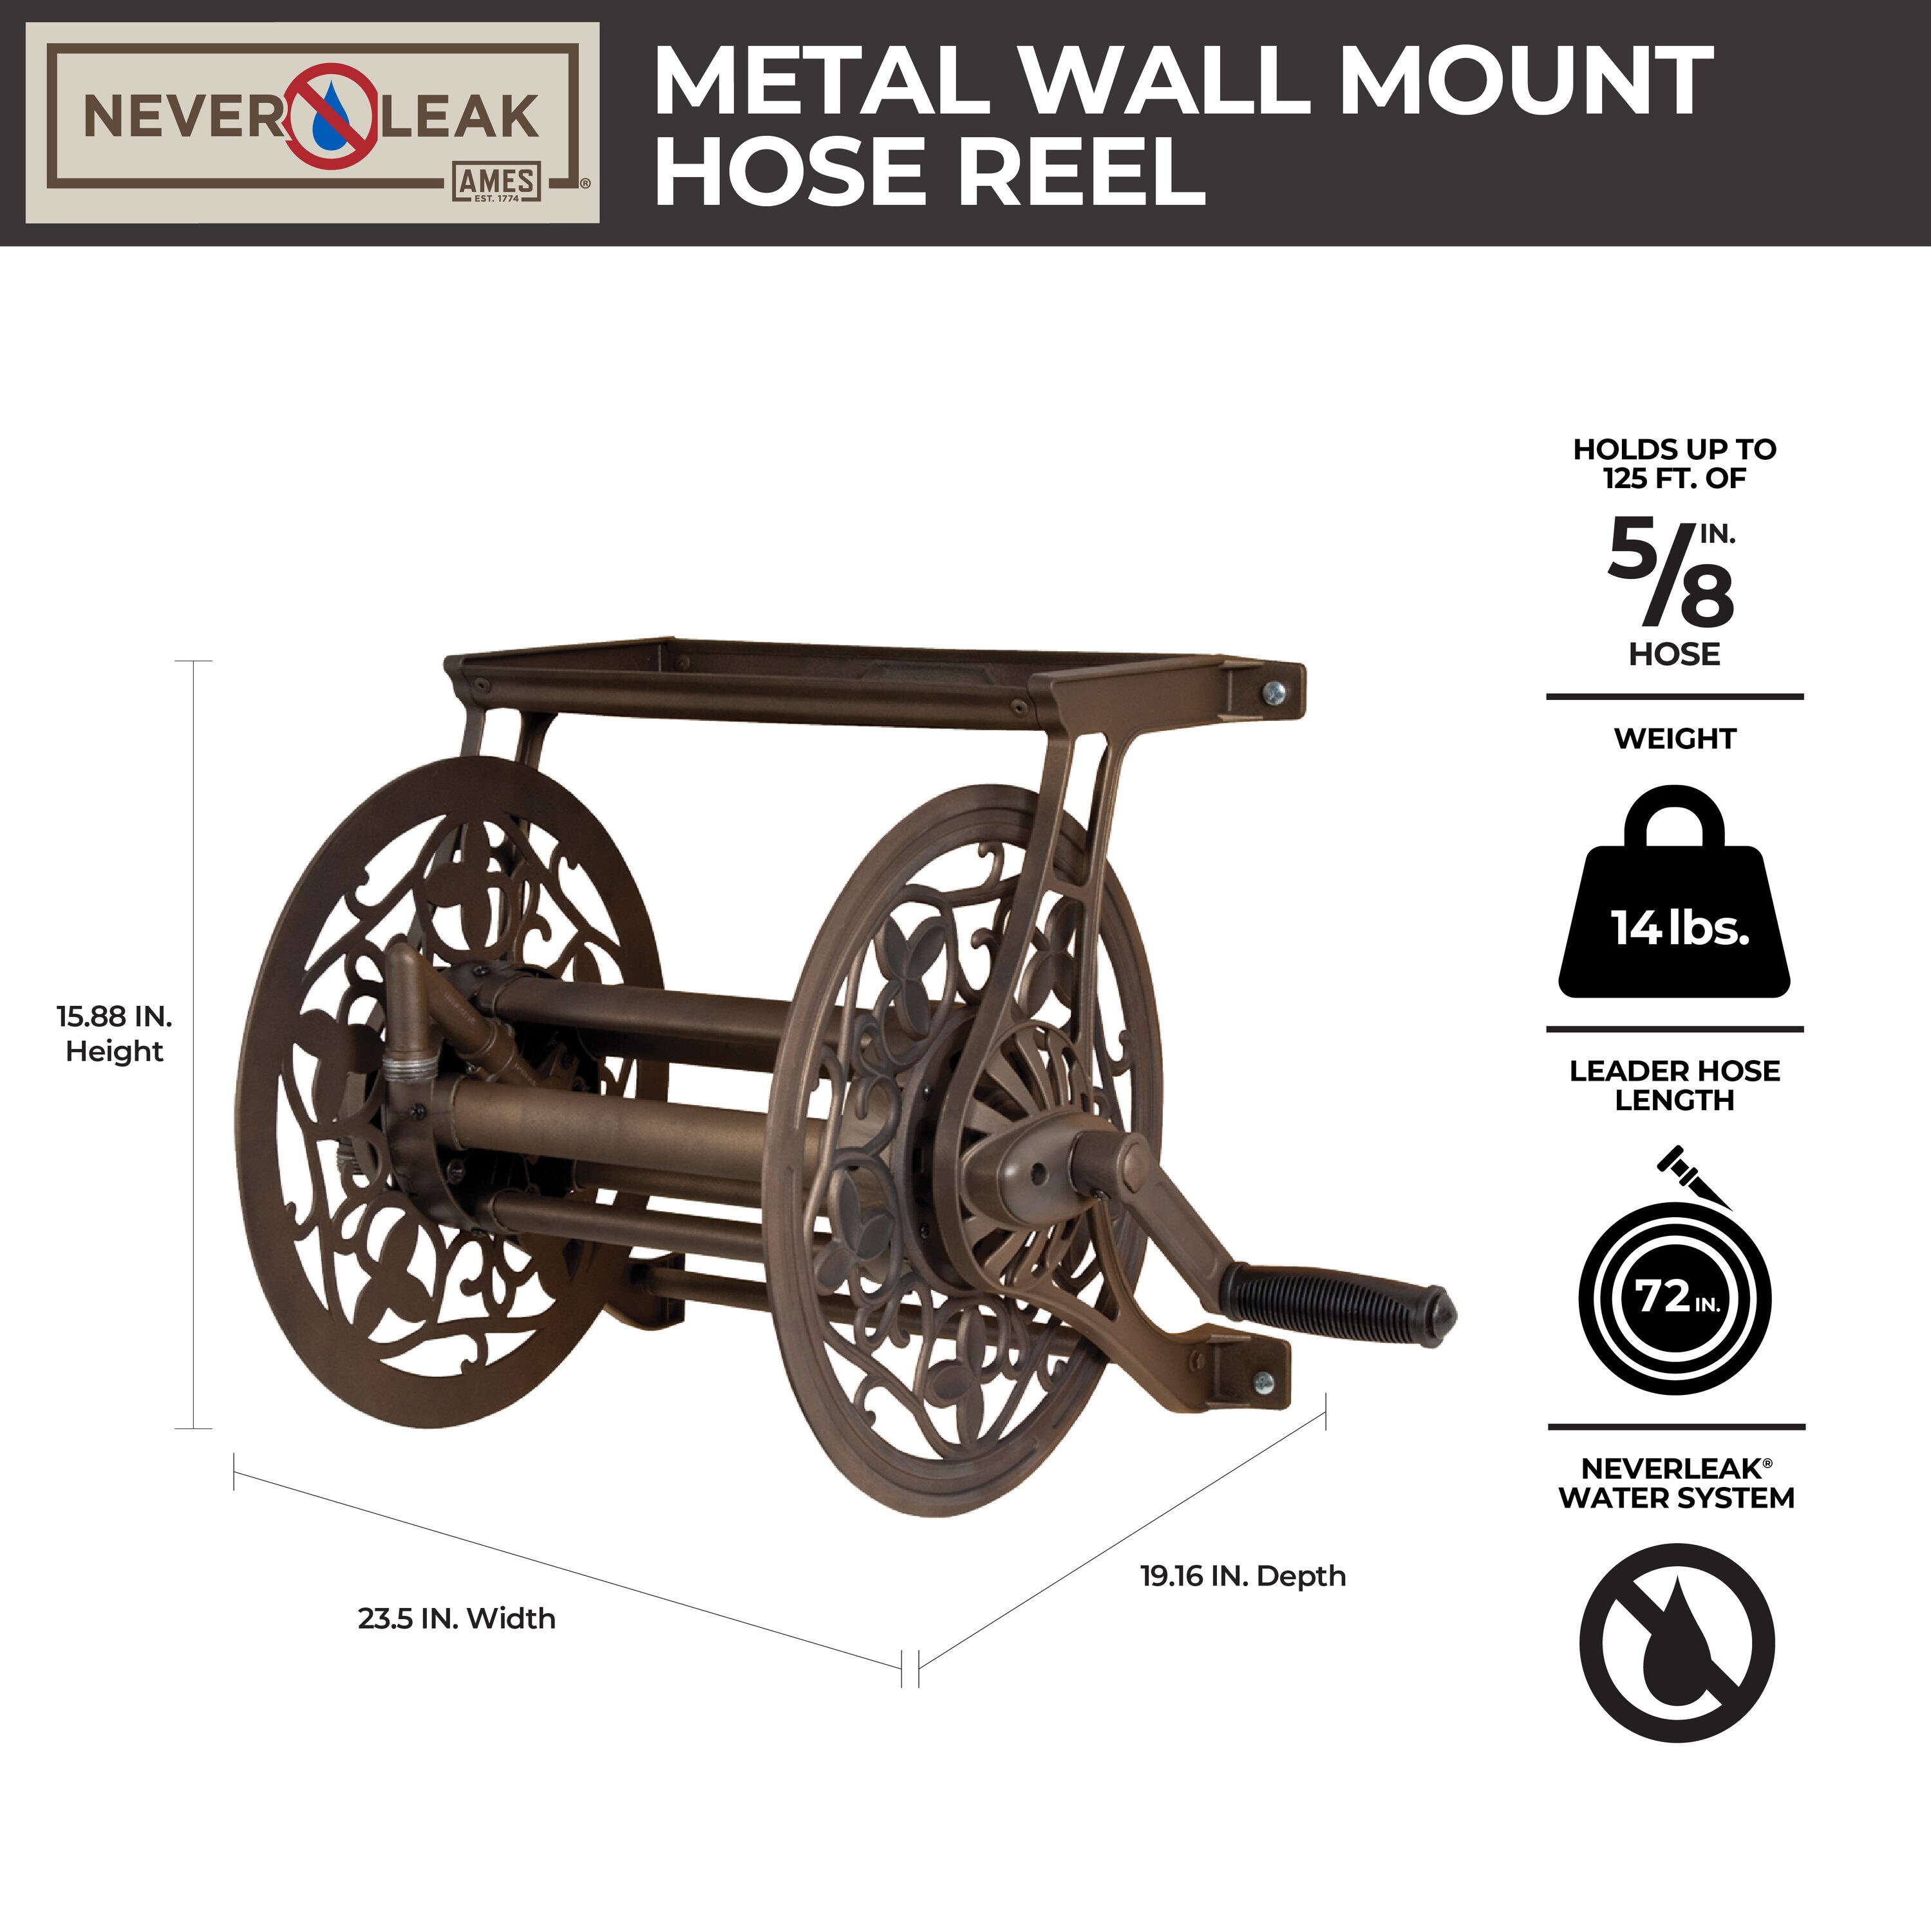 NeverLeak Aluminum 125-ft Wall-mount Hose Reel